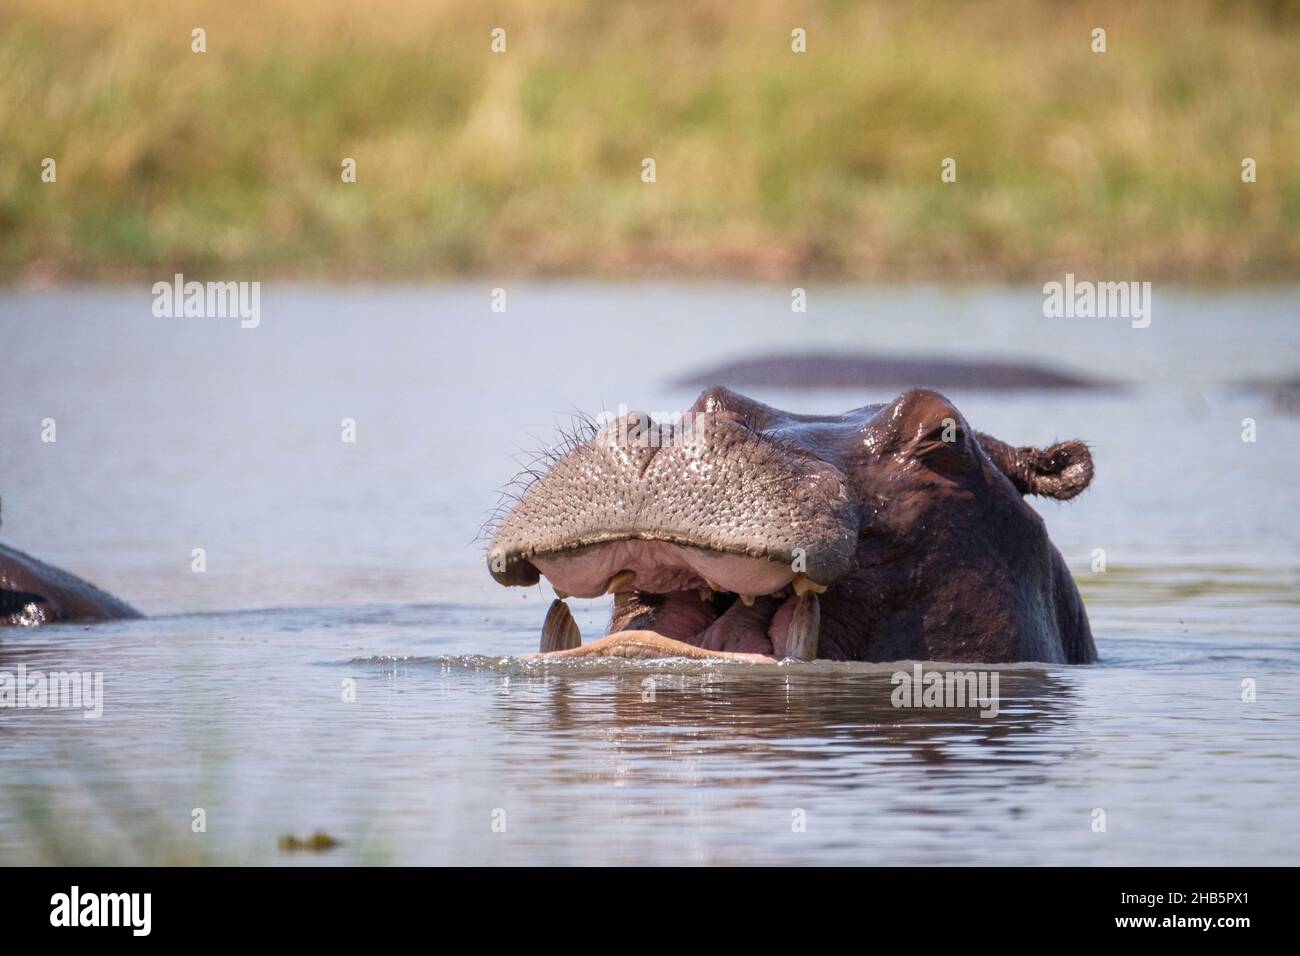 Ippopotamo (Hippopotamus amphibius) faccia con bocca aperta. Hippopotamus sott'acqua. South Luangwa National Park, Zambia, Africa Foto Stock